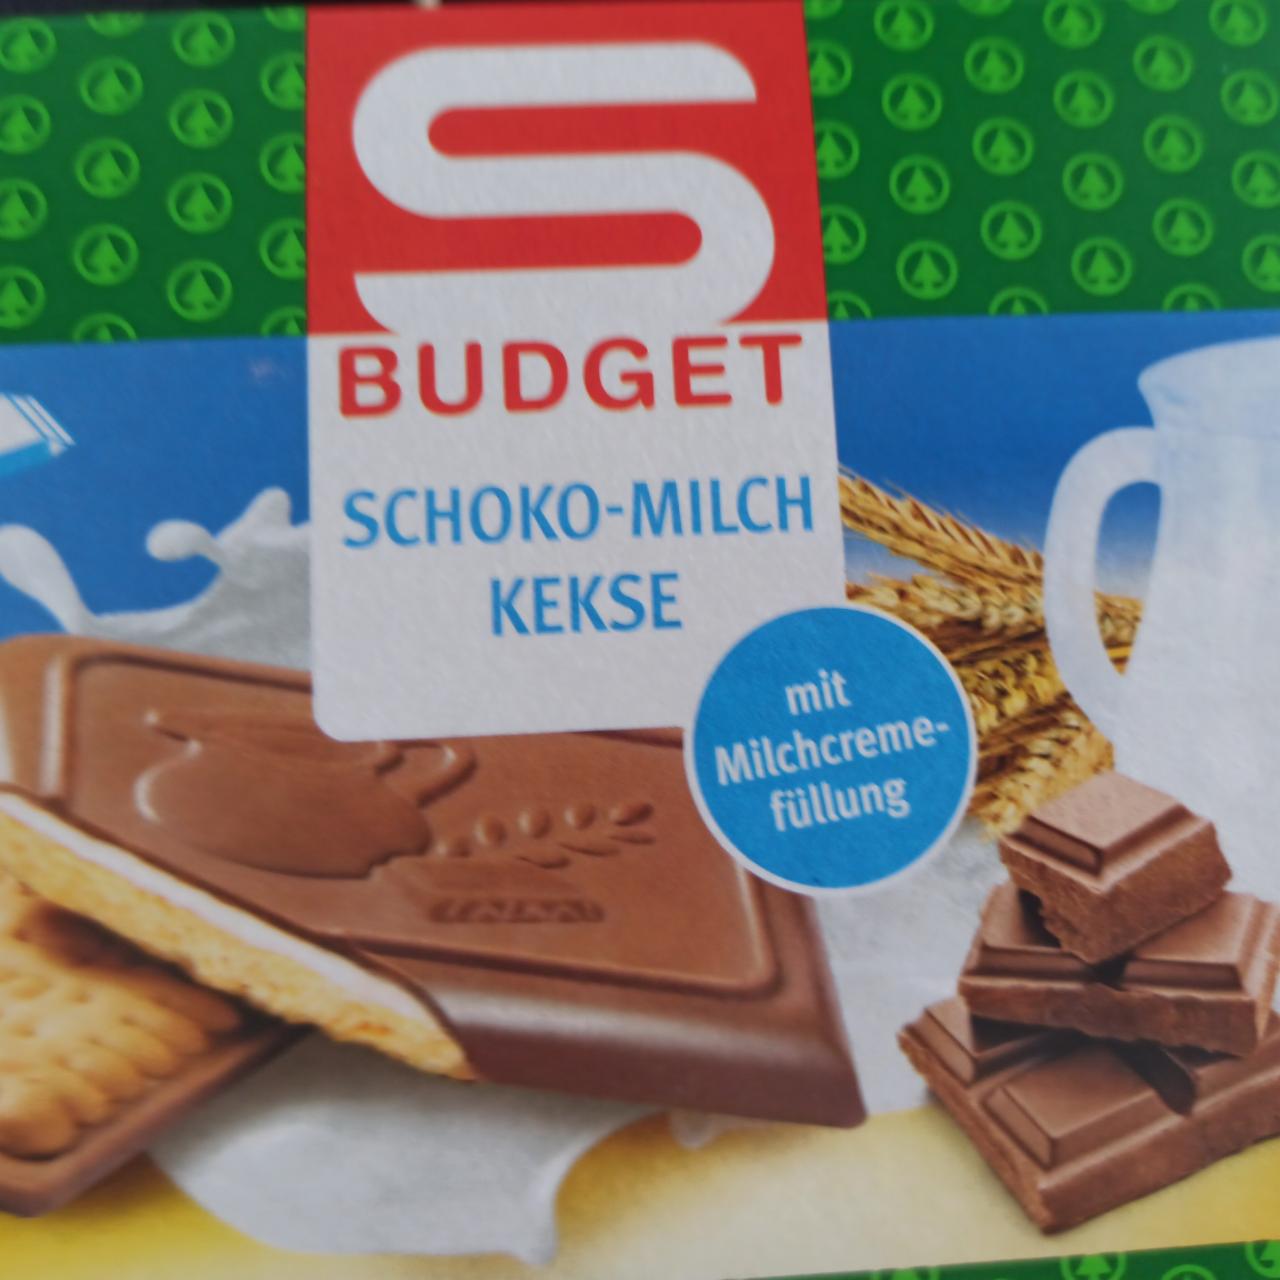 Fotografie - Schoko-milch kekse S Budget